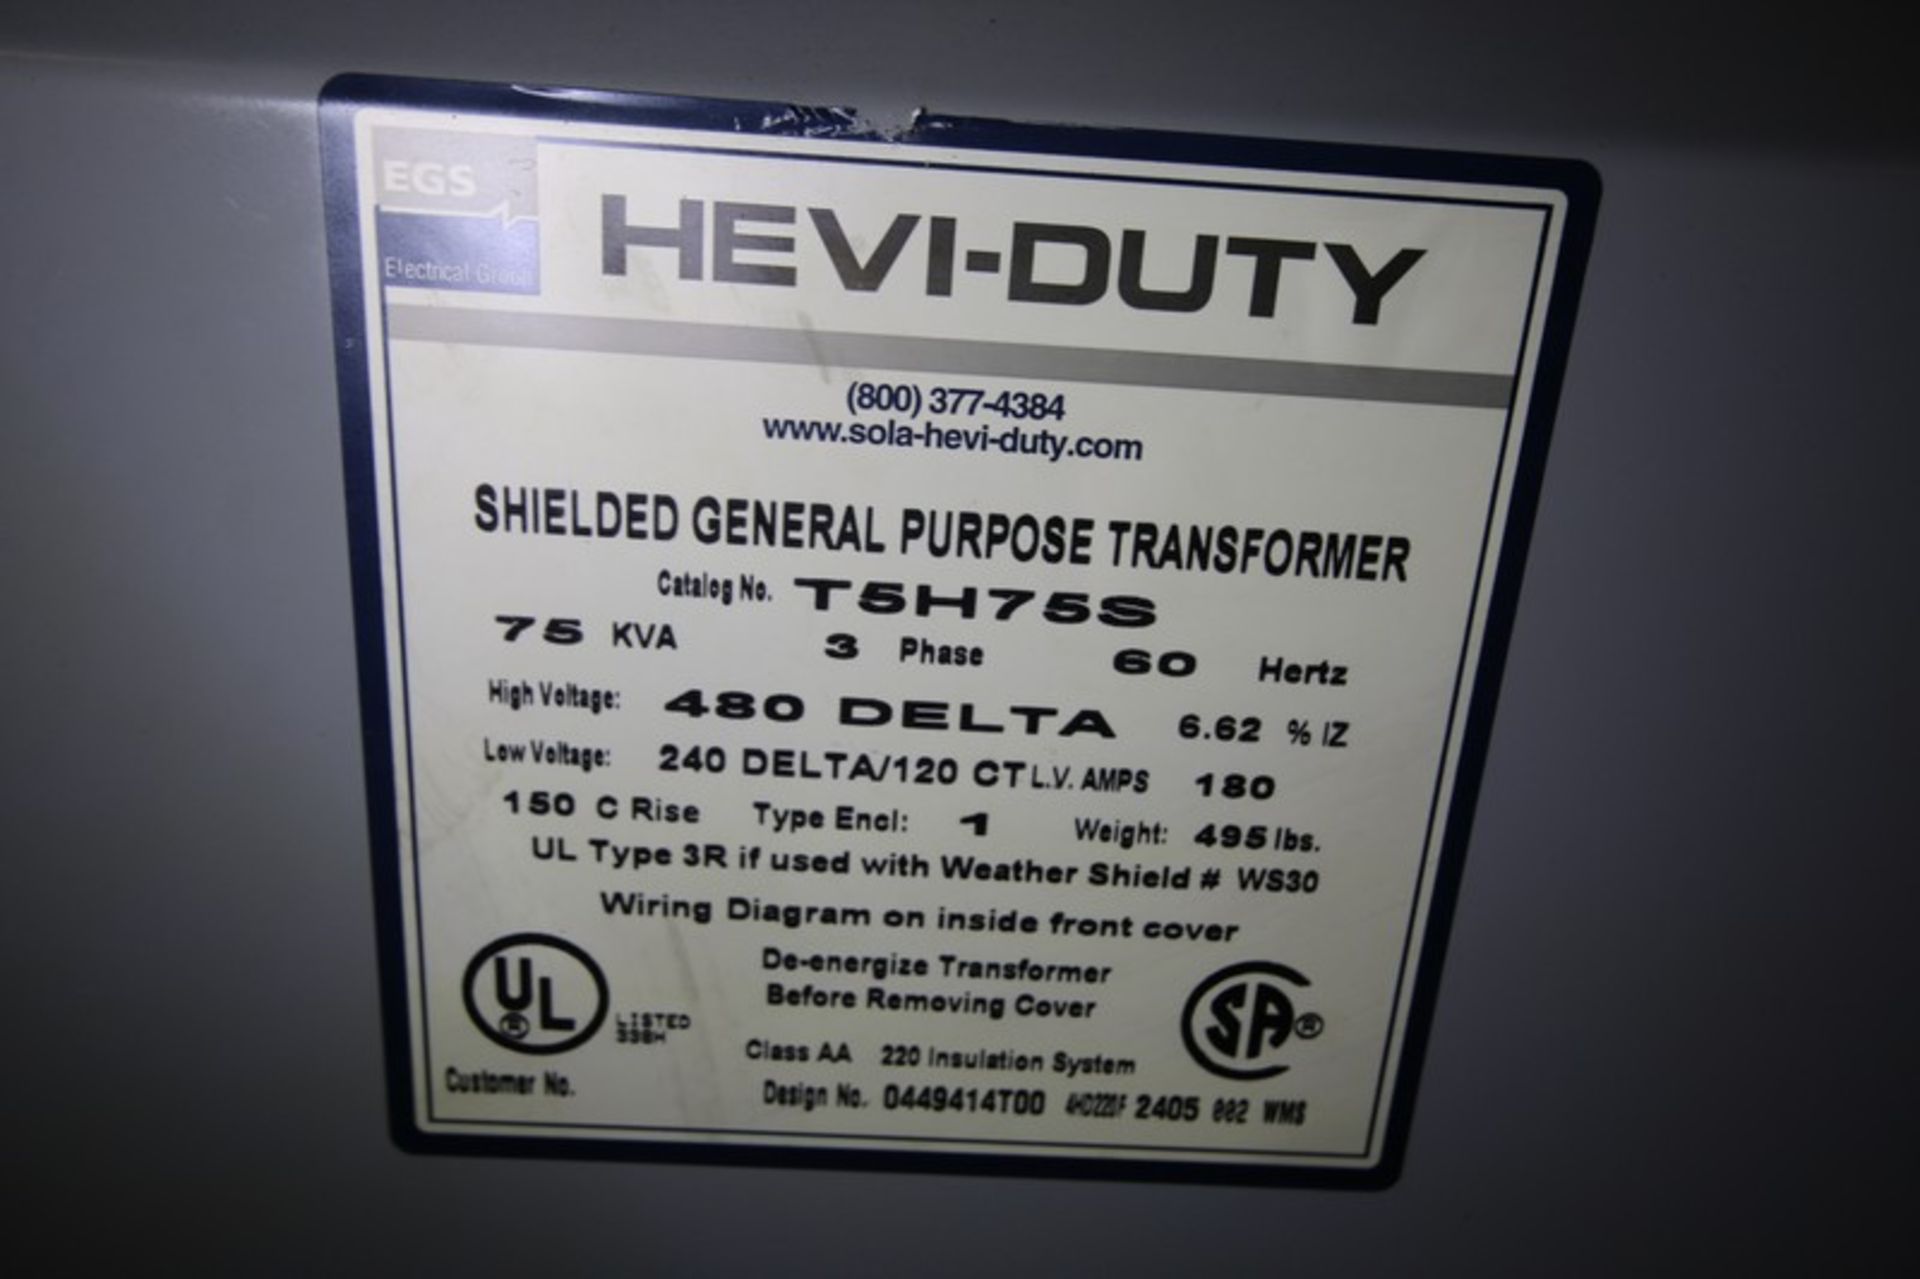 EGS Hevi-Duty 75 KVA Transformer, Cat No T5J5S, High Voltage - 480 Delta, Low Voltage - 240 - Image 2 of 7